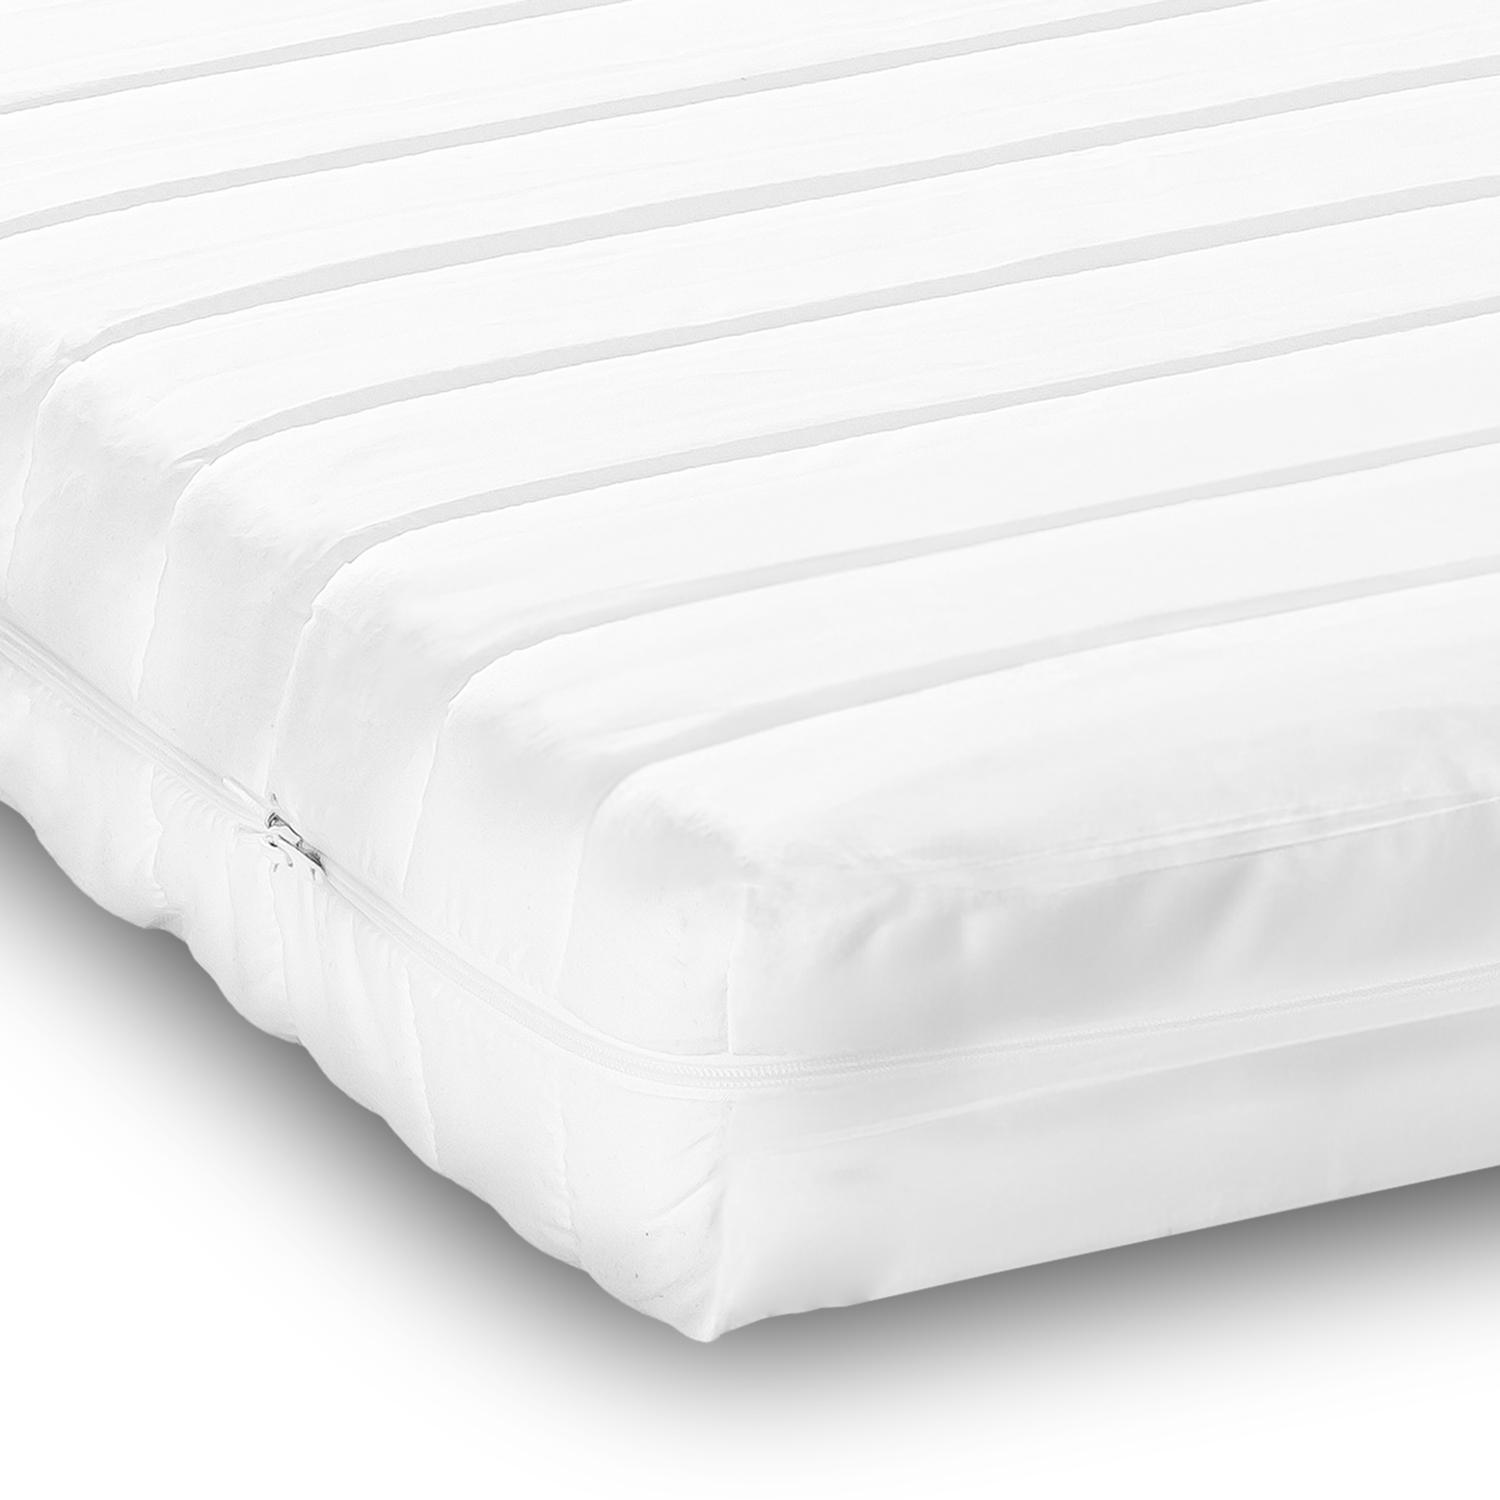 Cold foam mattress K16 180 x 200 cm, height 16 cm, firmness level H2/H3